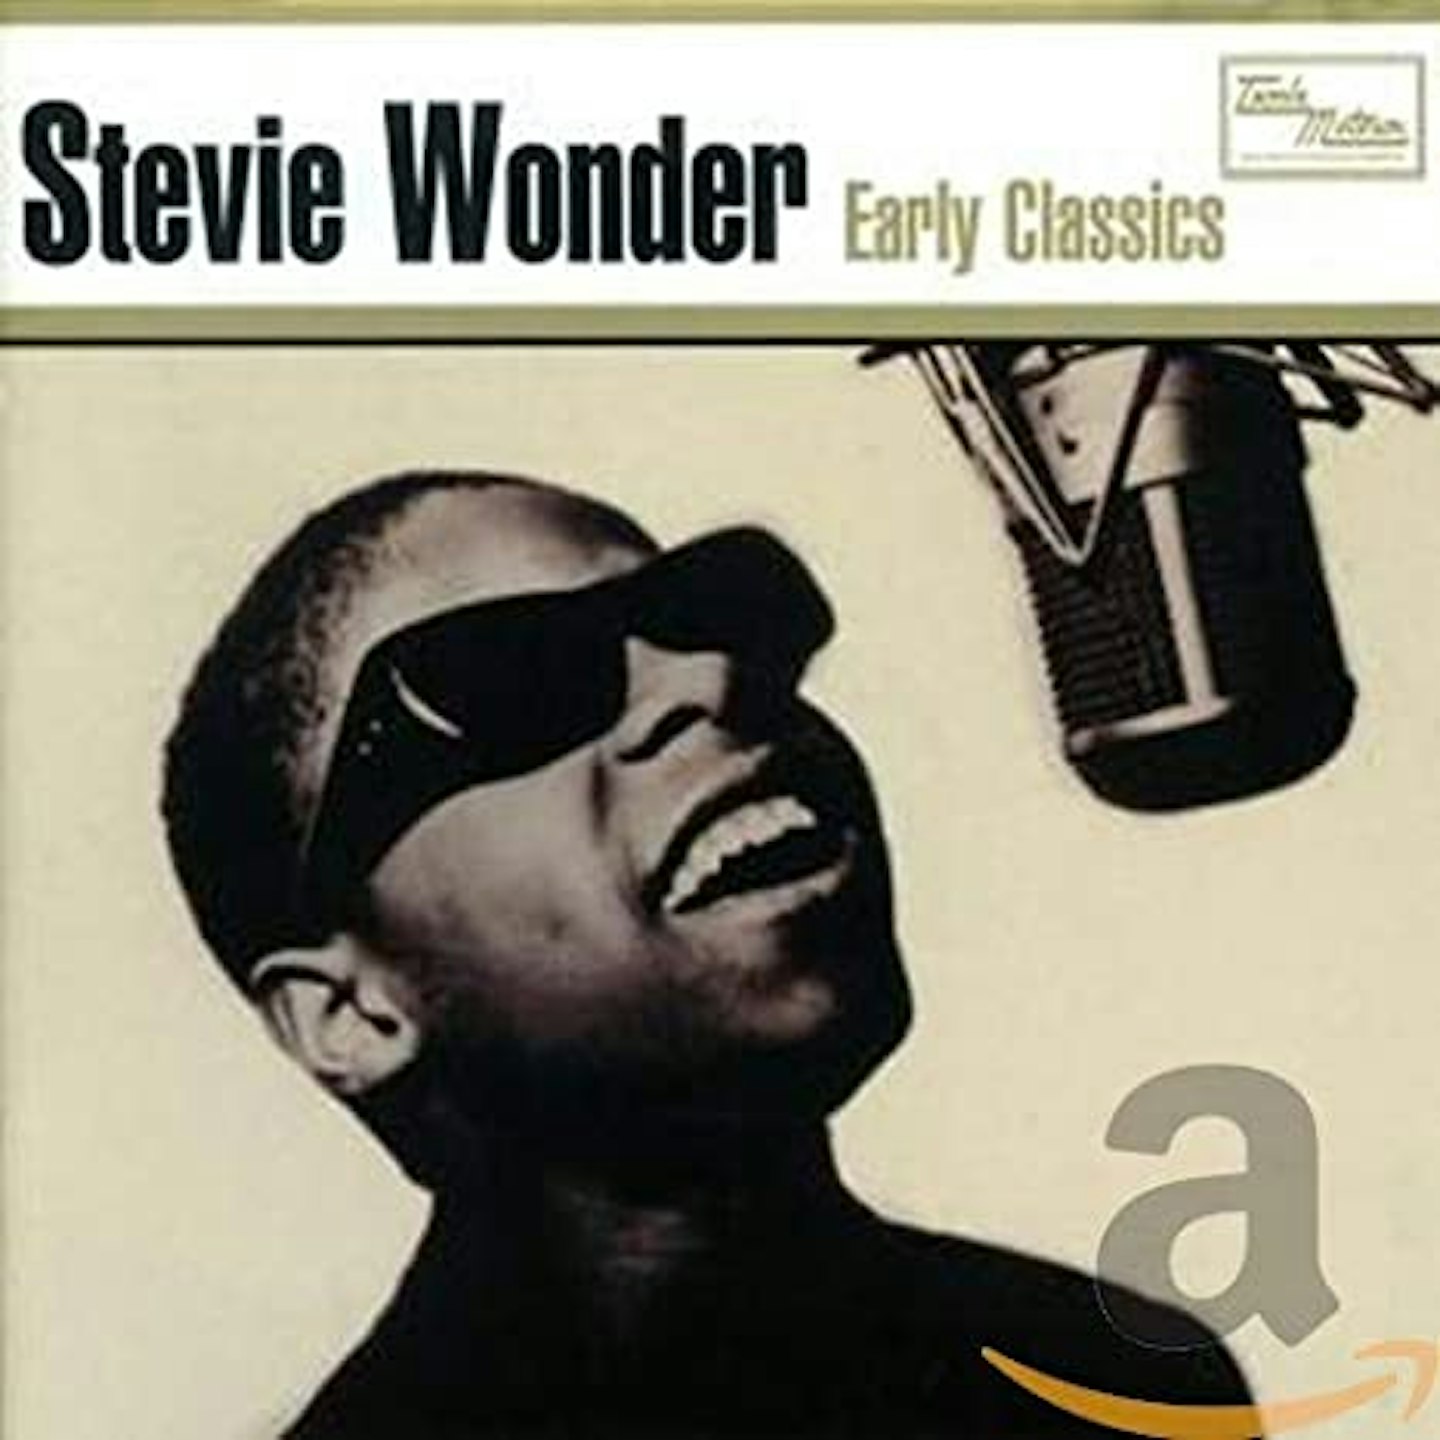 Early Classics - Stevie Wonder